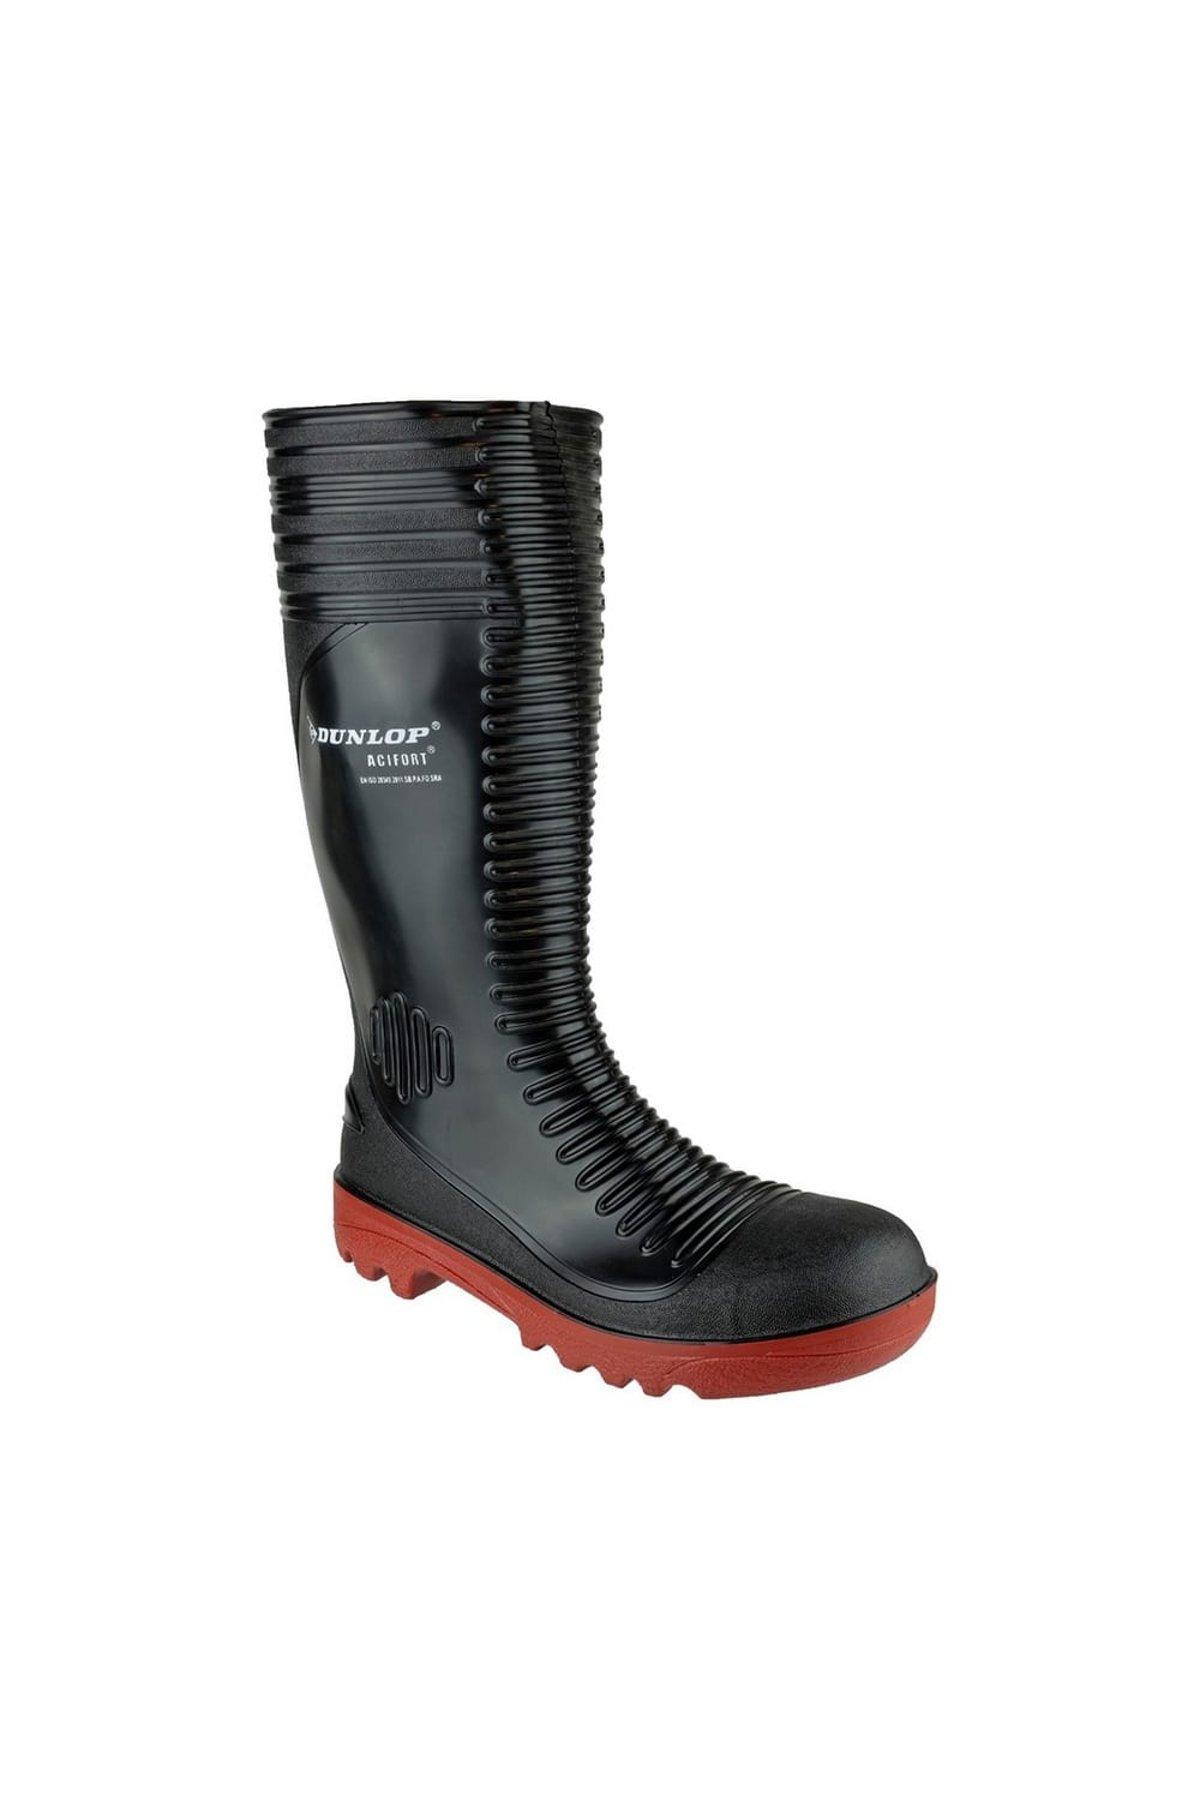 Dunlop Acifort Full Safety Welly Black Ribbed Wellington Boot 6-12 EN:ISO 20345 